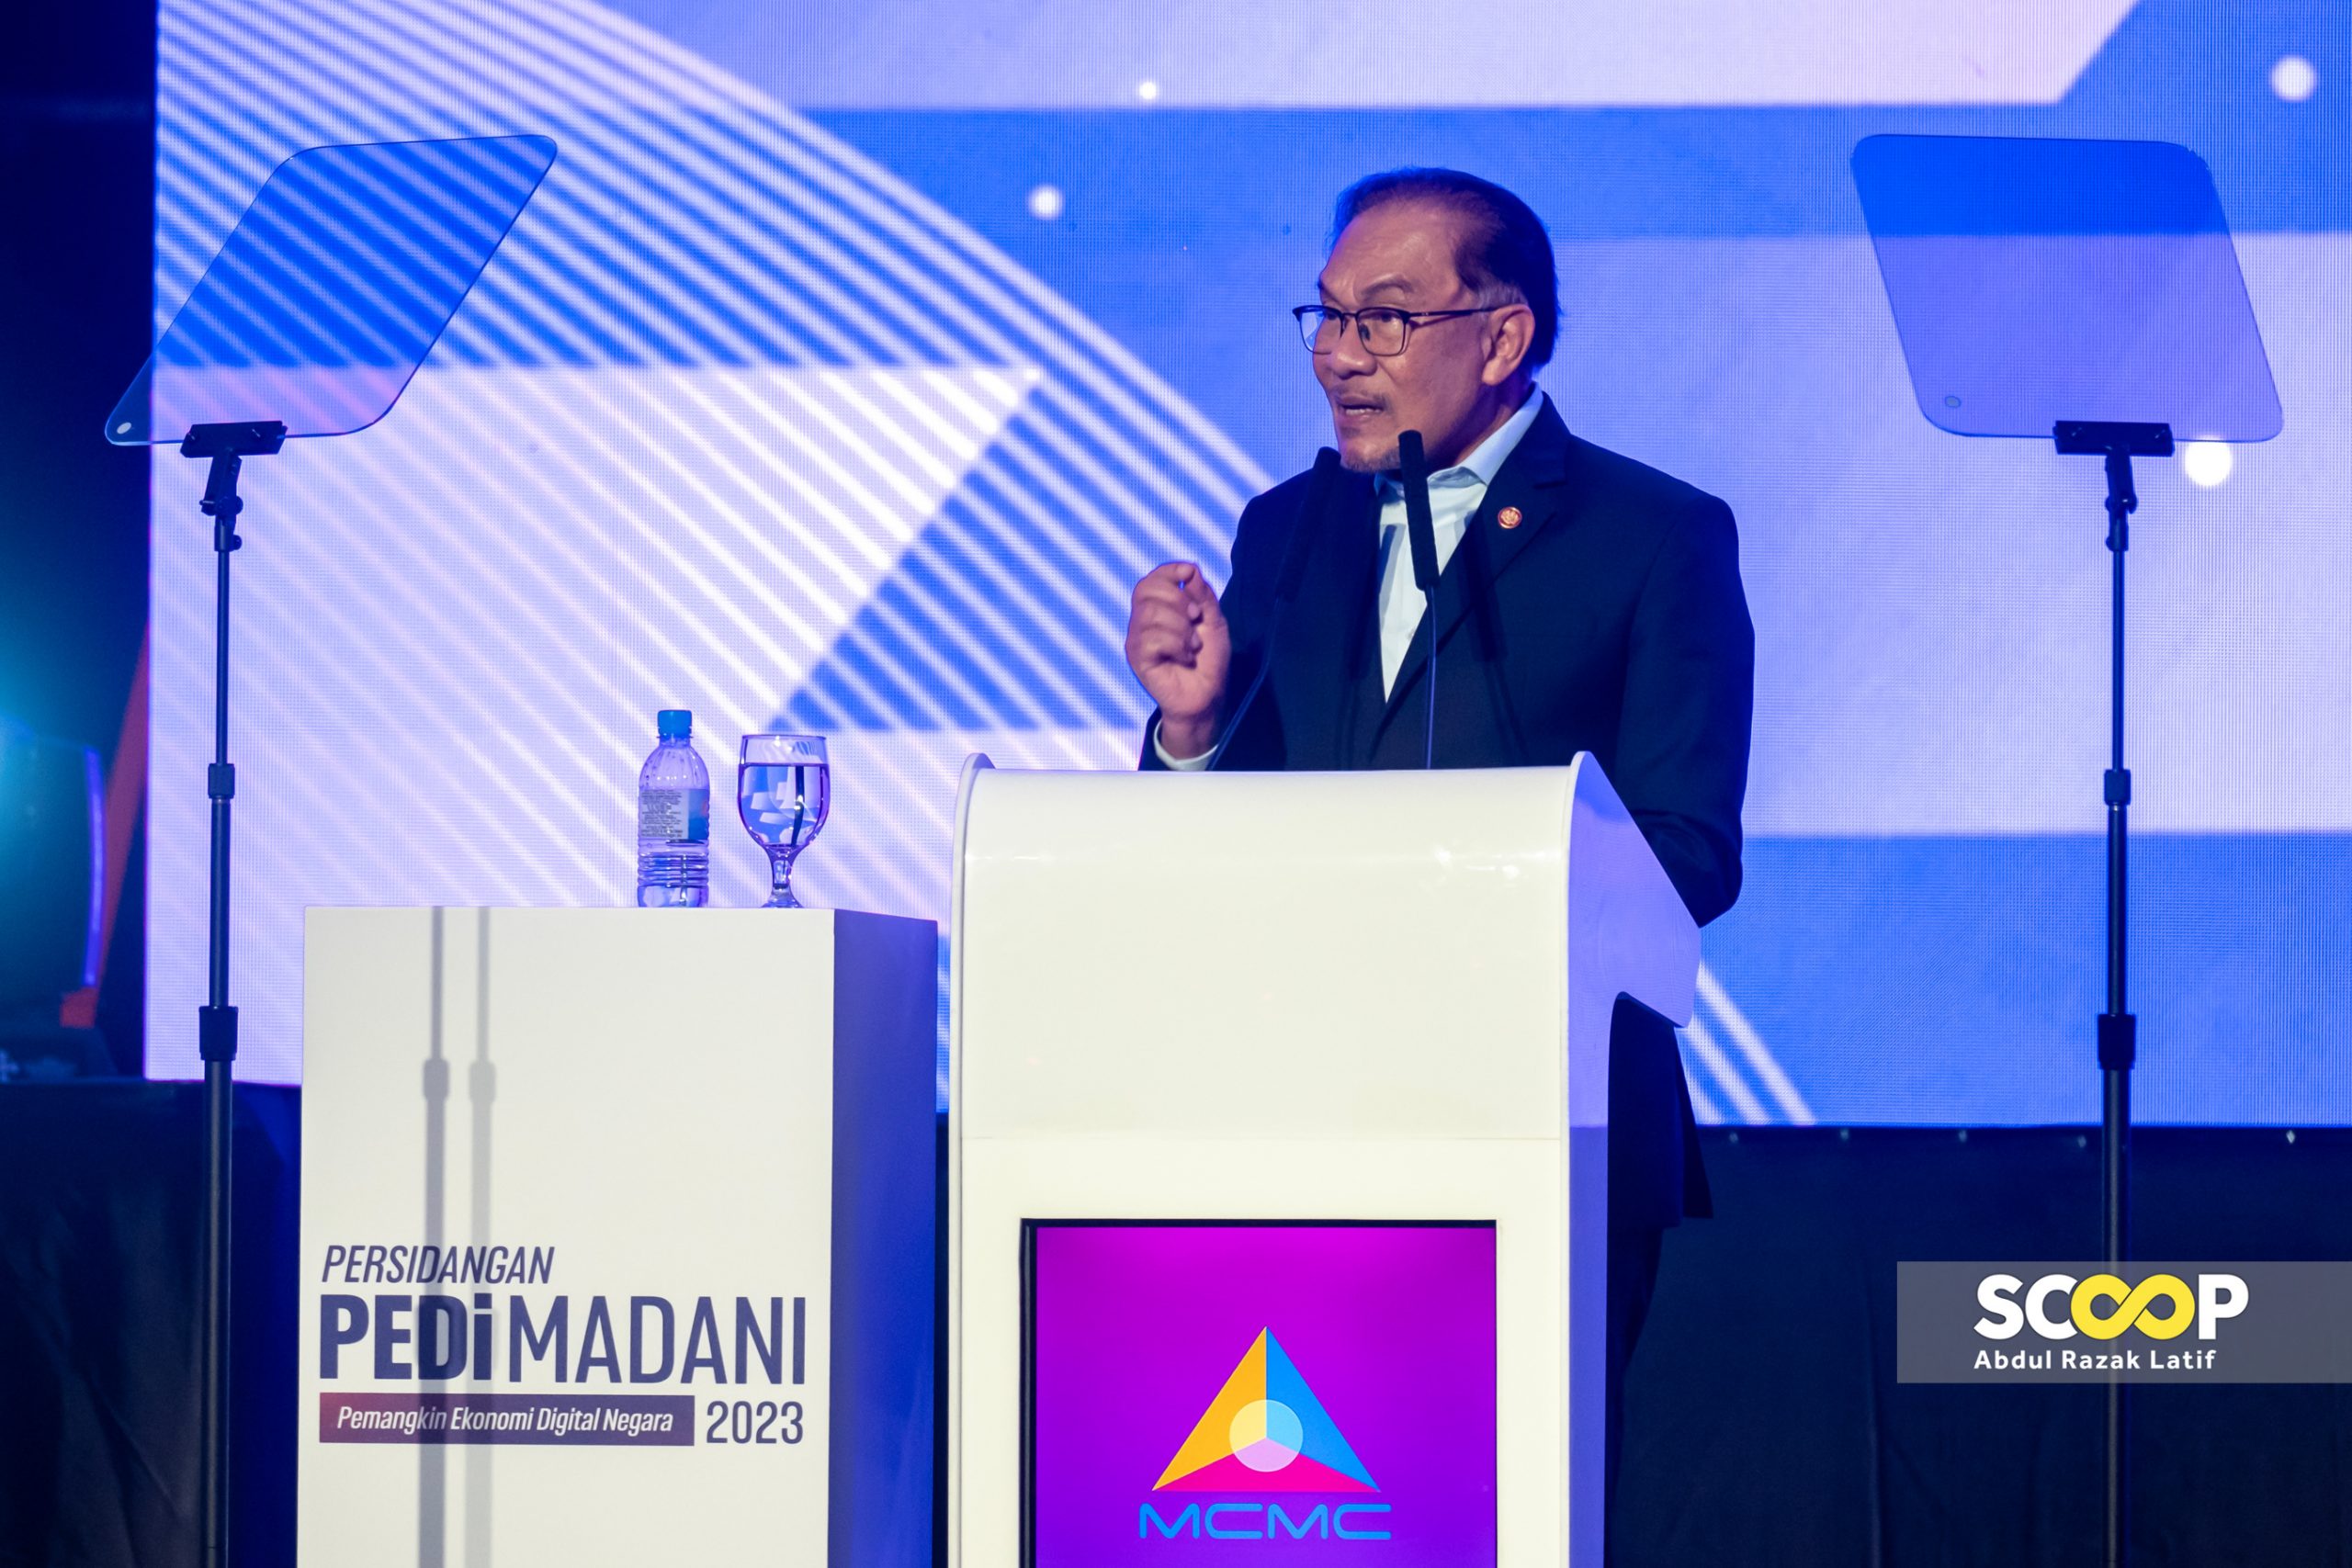 Telcos should unite for tech talent development, digital progress: Anwar